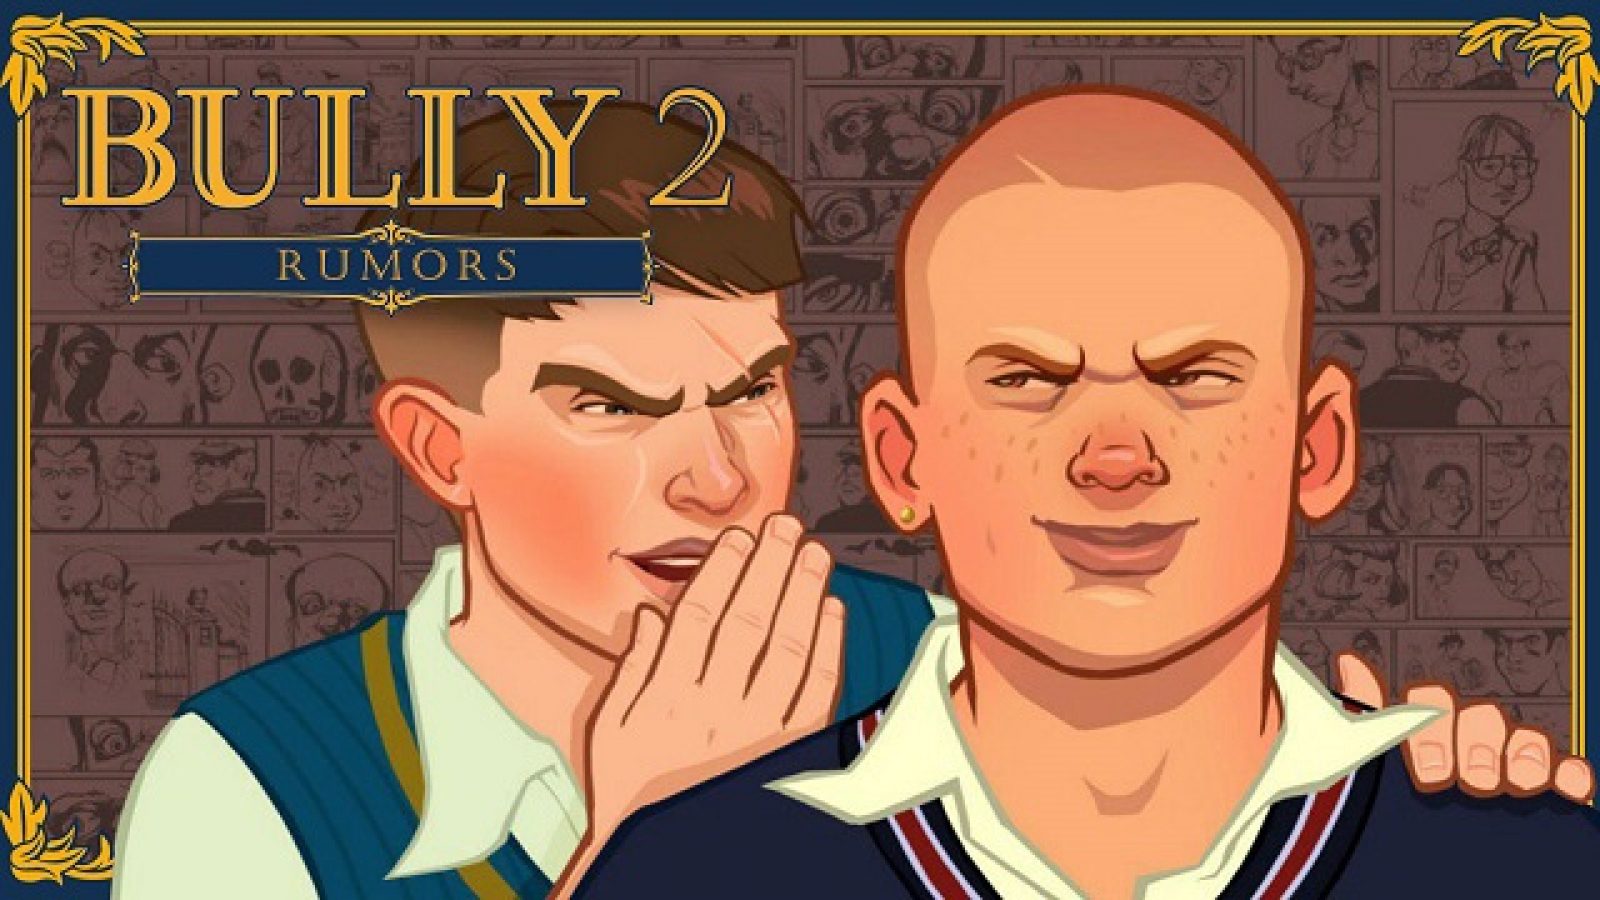 Plans for a surprise Bully 2 announcement leaks